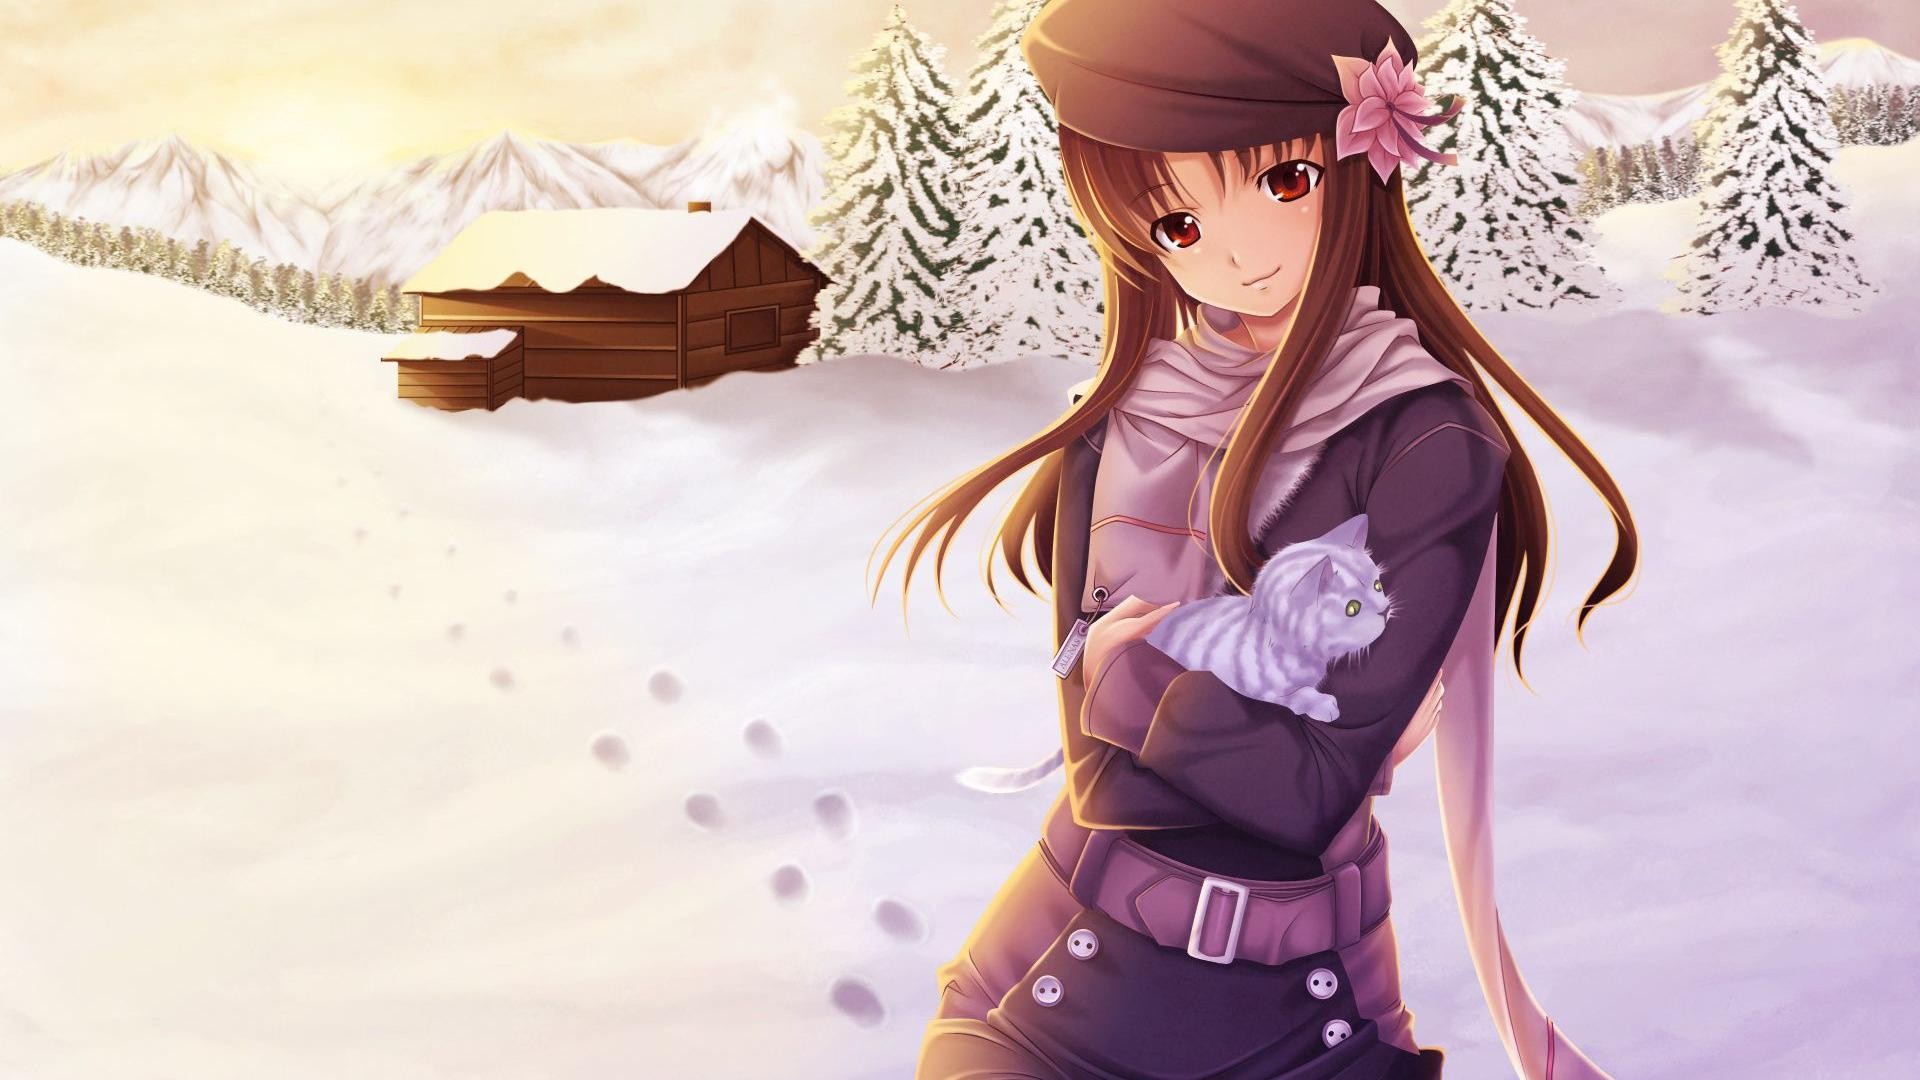  Anime  Girls wallpaper    Download free beautiful 